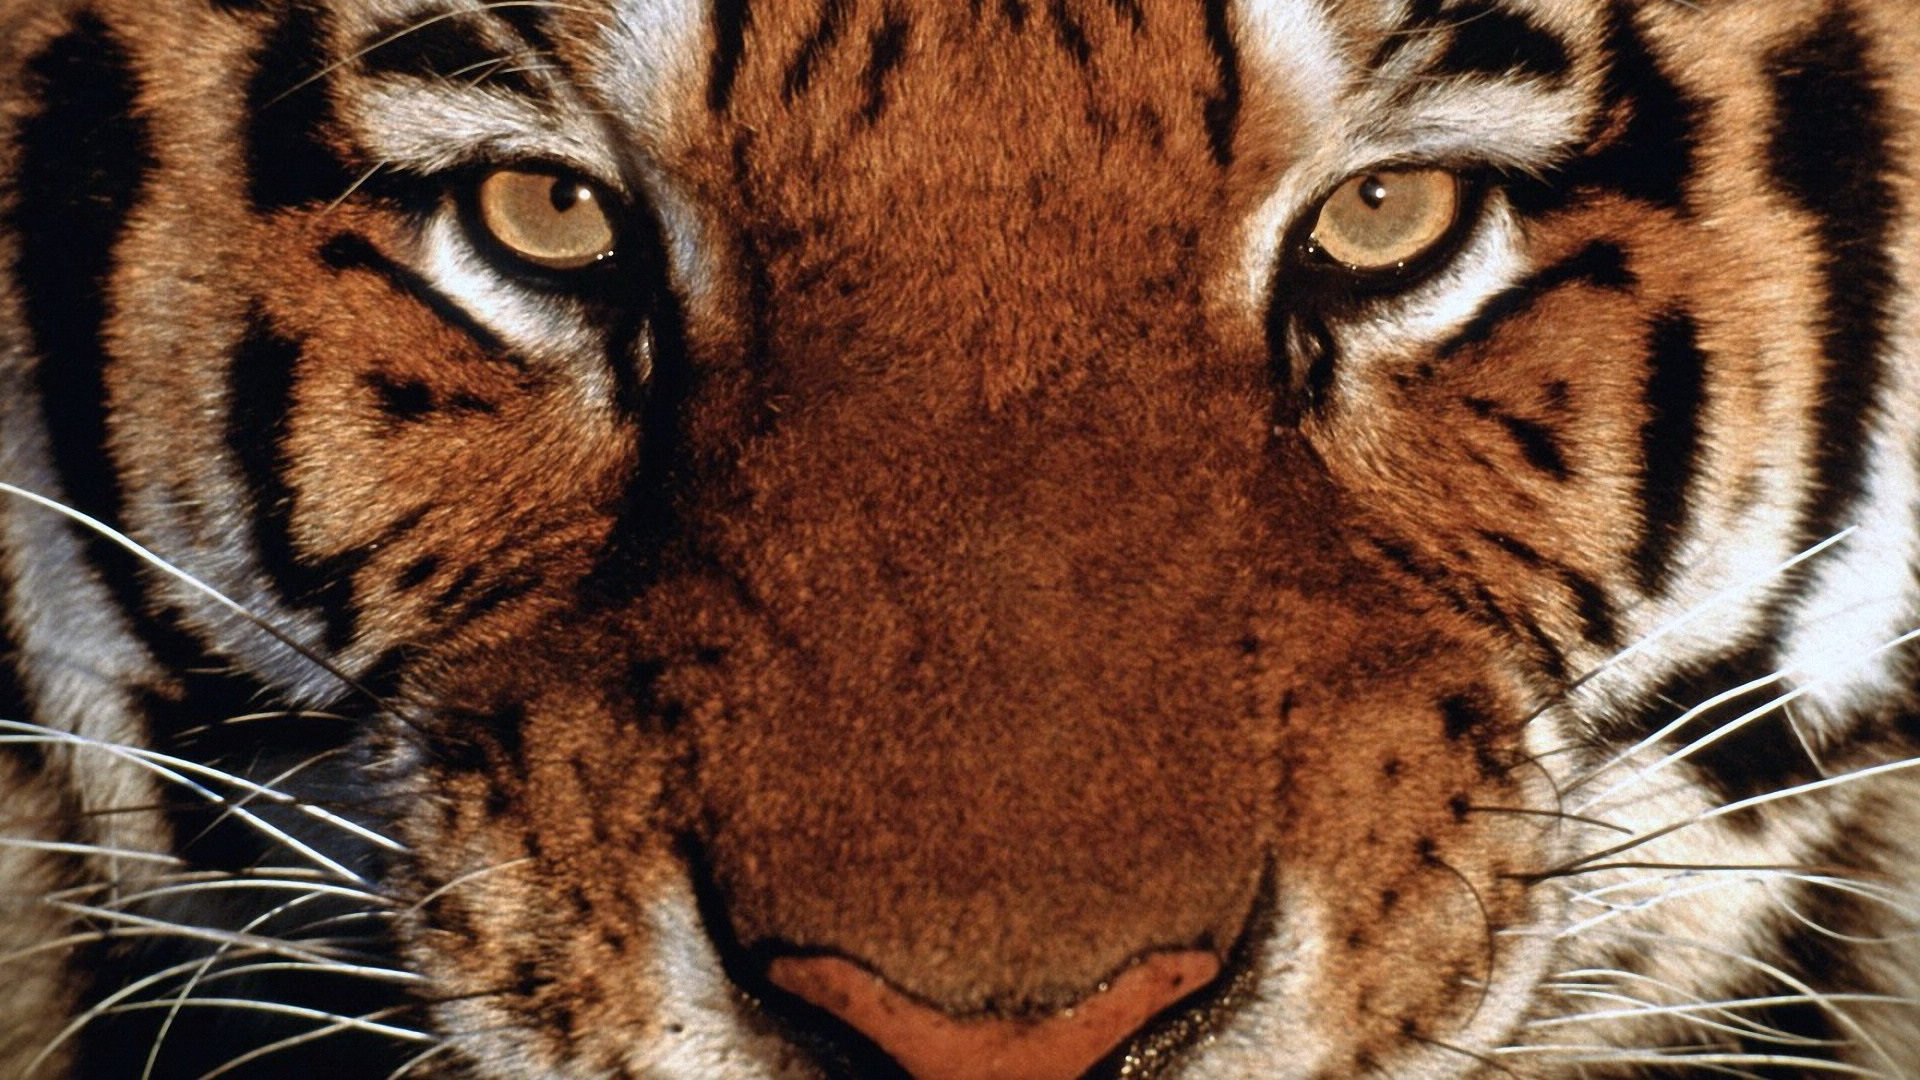 High Resolution Tiger Face Wallpaper Full Size - SiWallpaperHD 15600